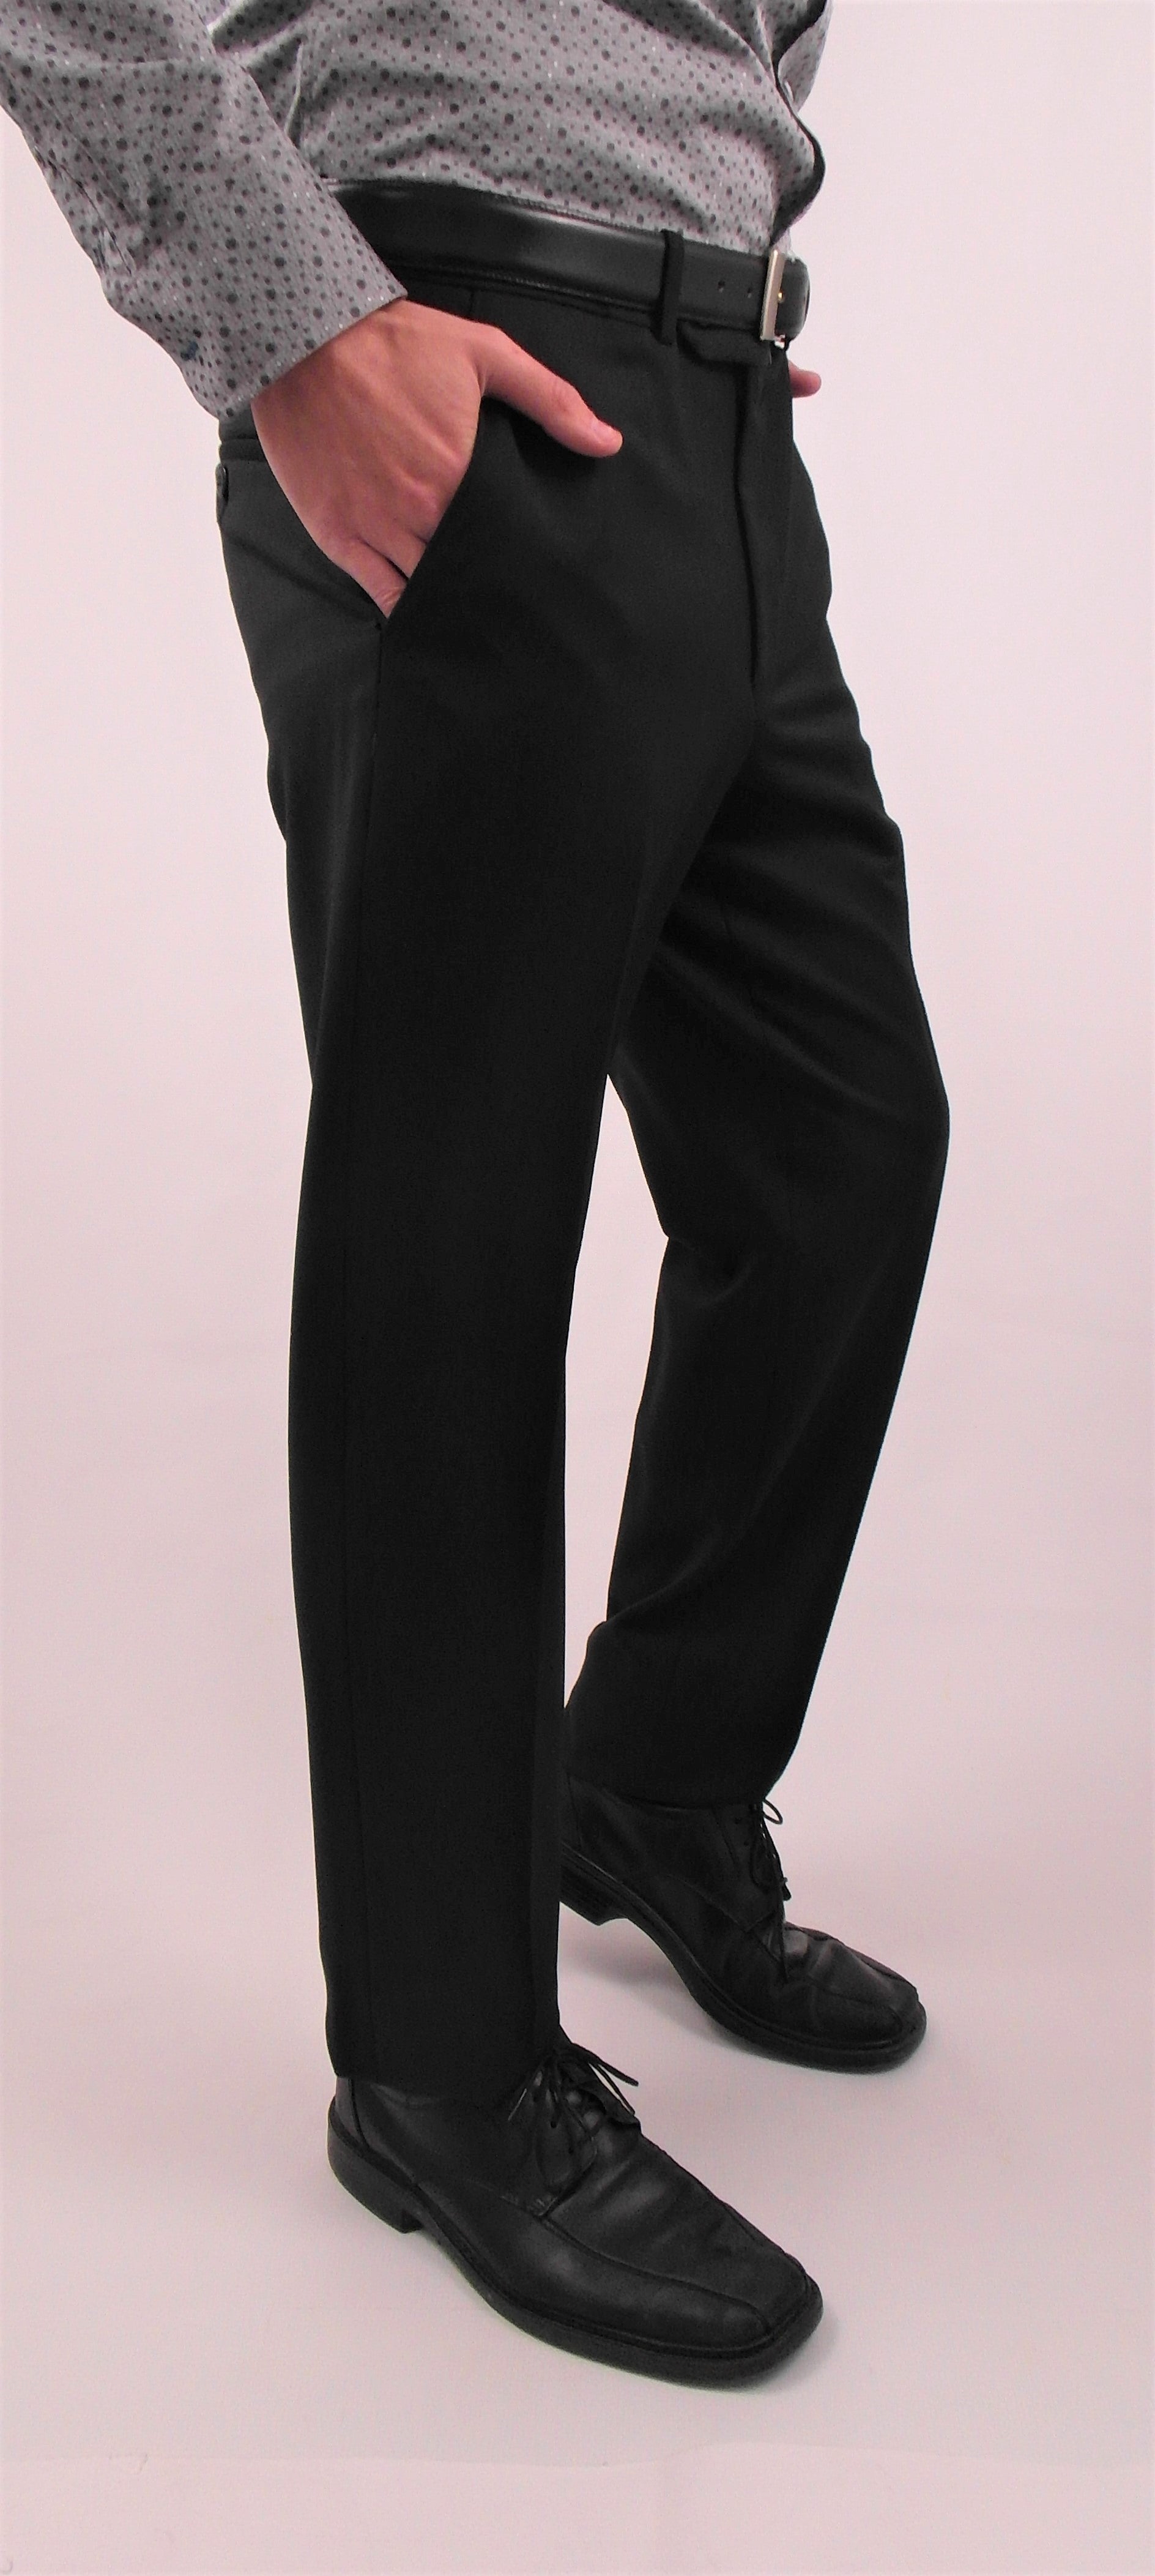 Sansabelt slim cut, flat front poly/wool pants with top pockets